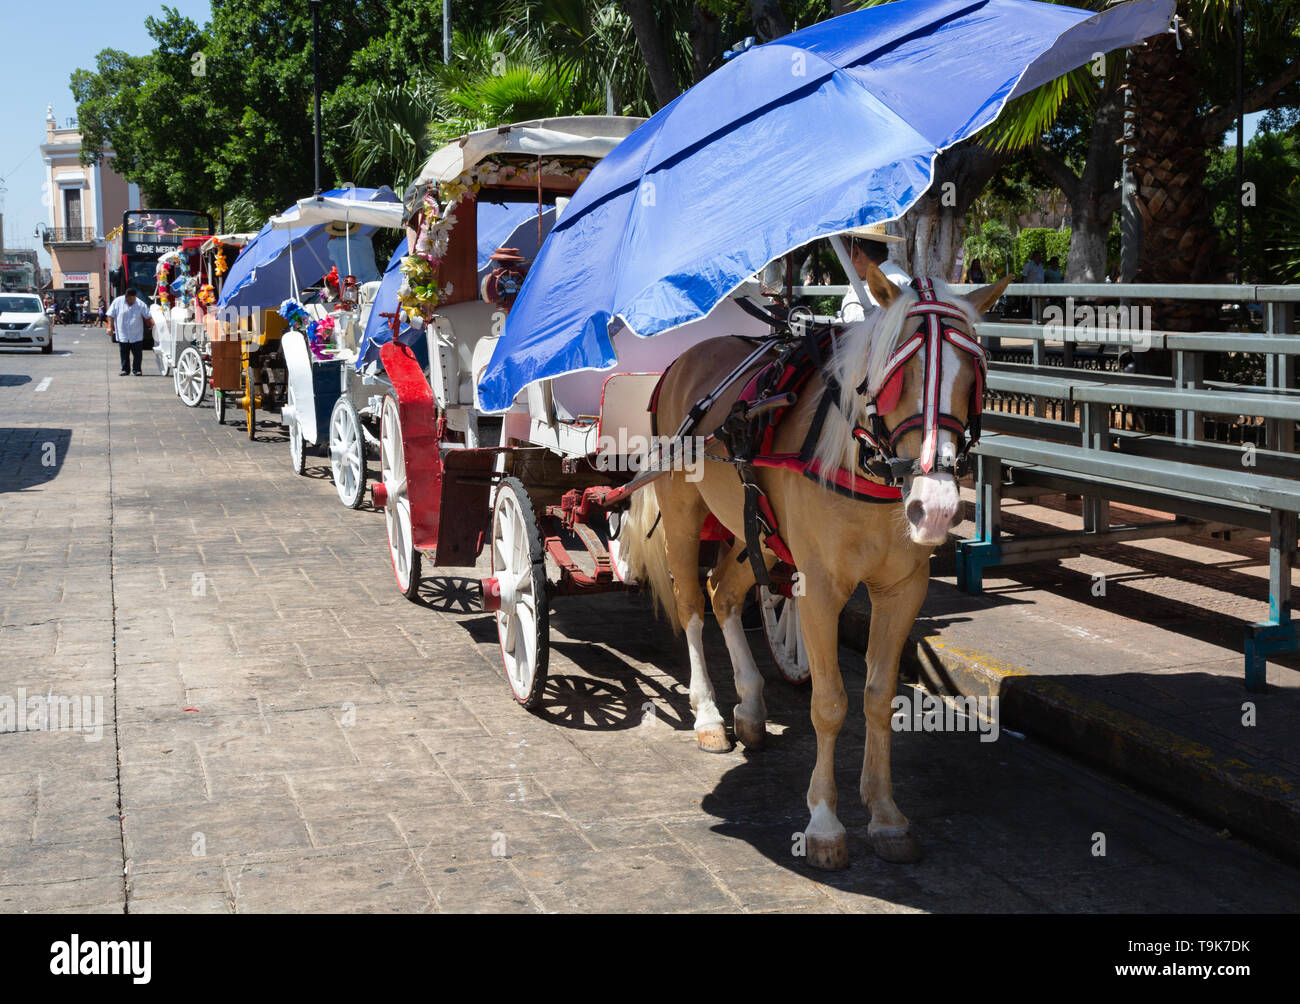 Mexiko Tourismus - Kutschen und Pferde warten auf Touristen; Plaza de Independencia, Merida Yucatan Mexiko Lateinamerika Stockfoto